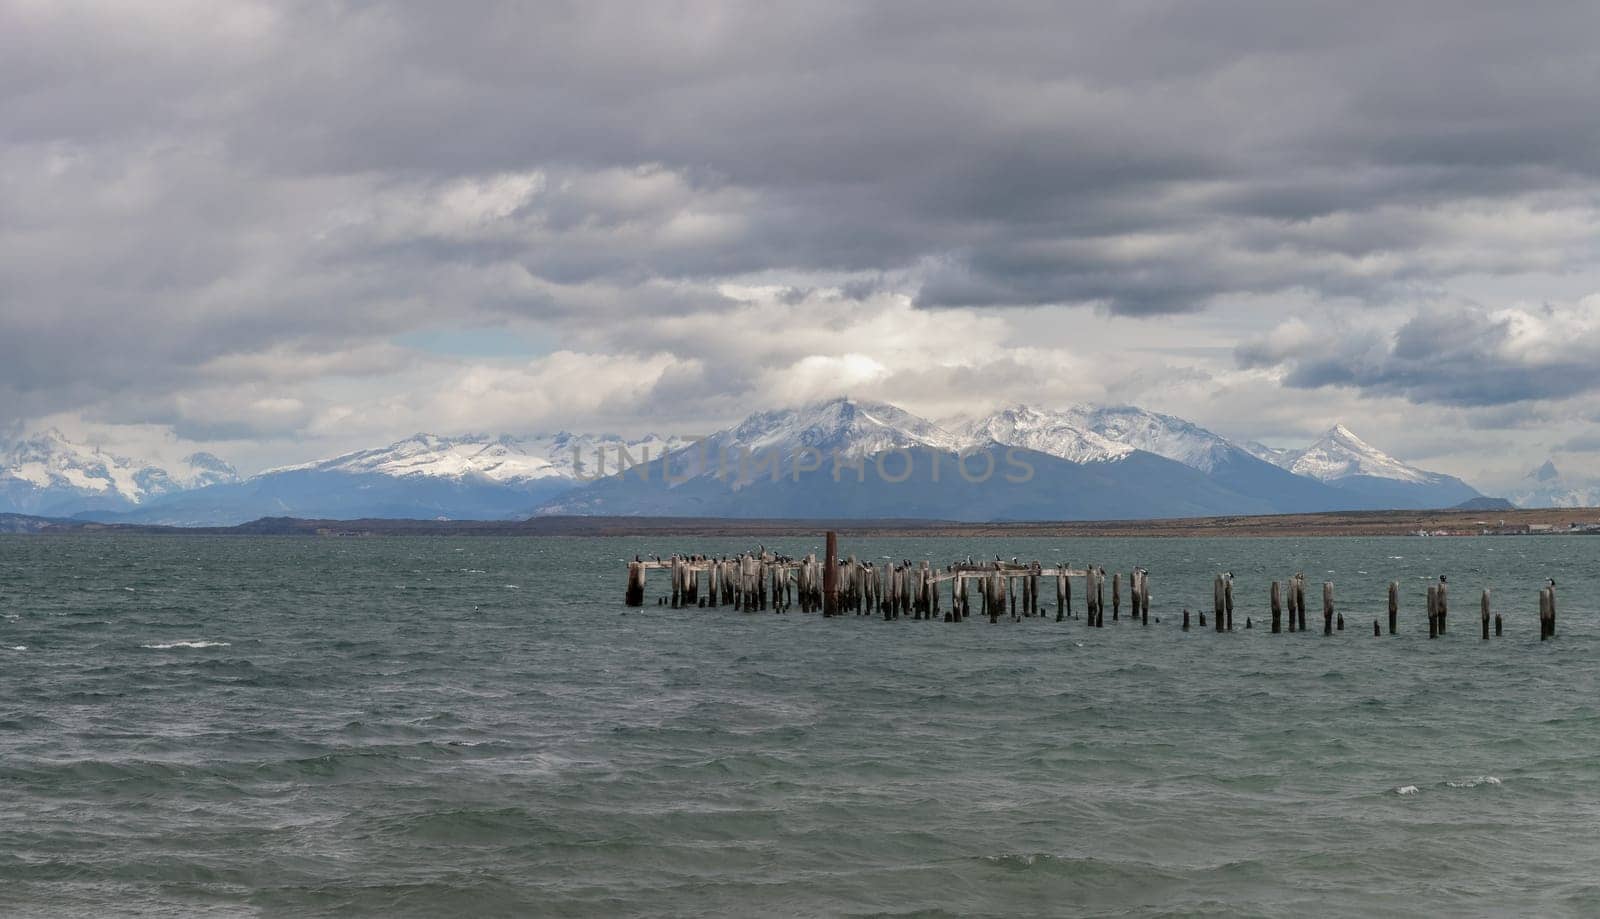 Old Pier Remnants Against a Majestic Snowy Mountain Range by FerradalFCG